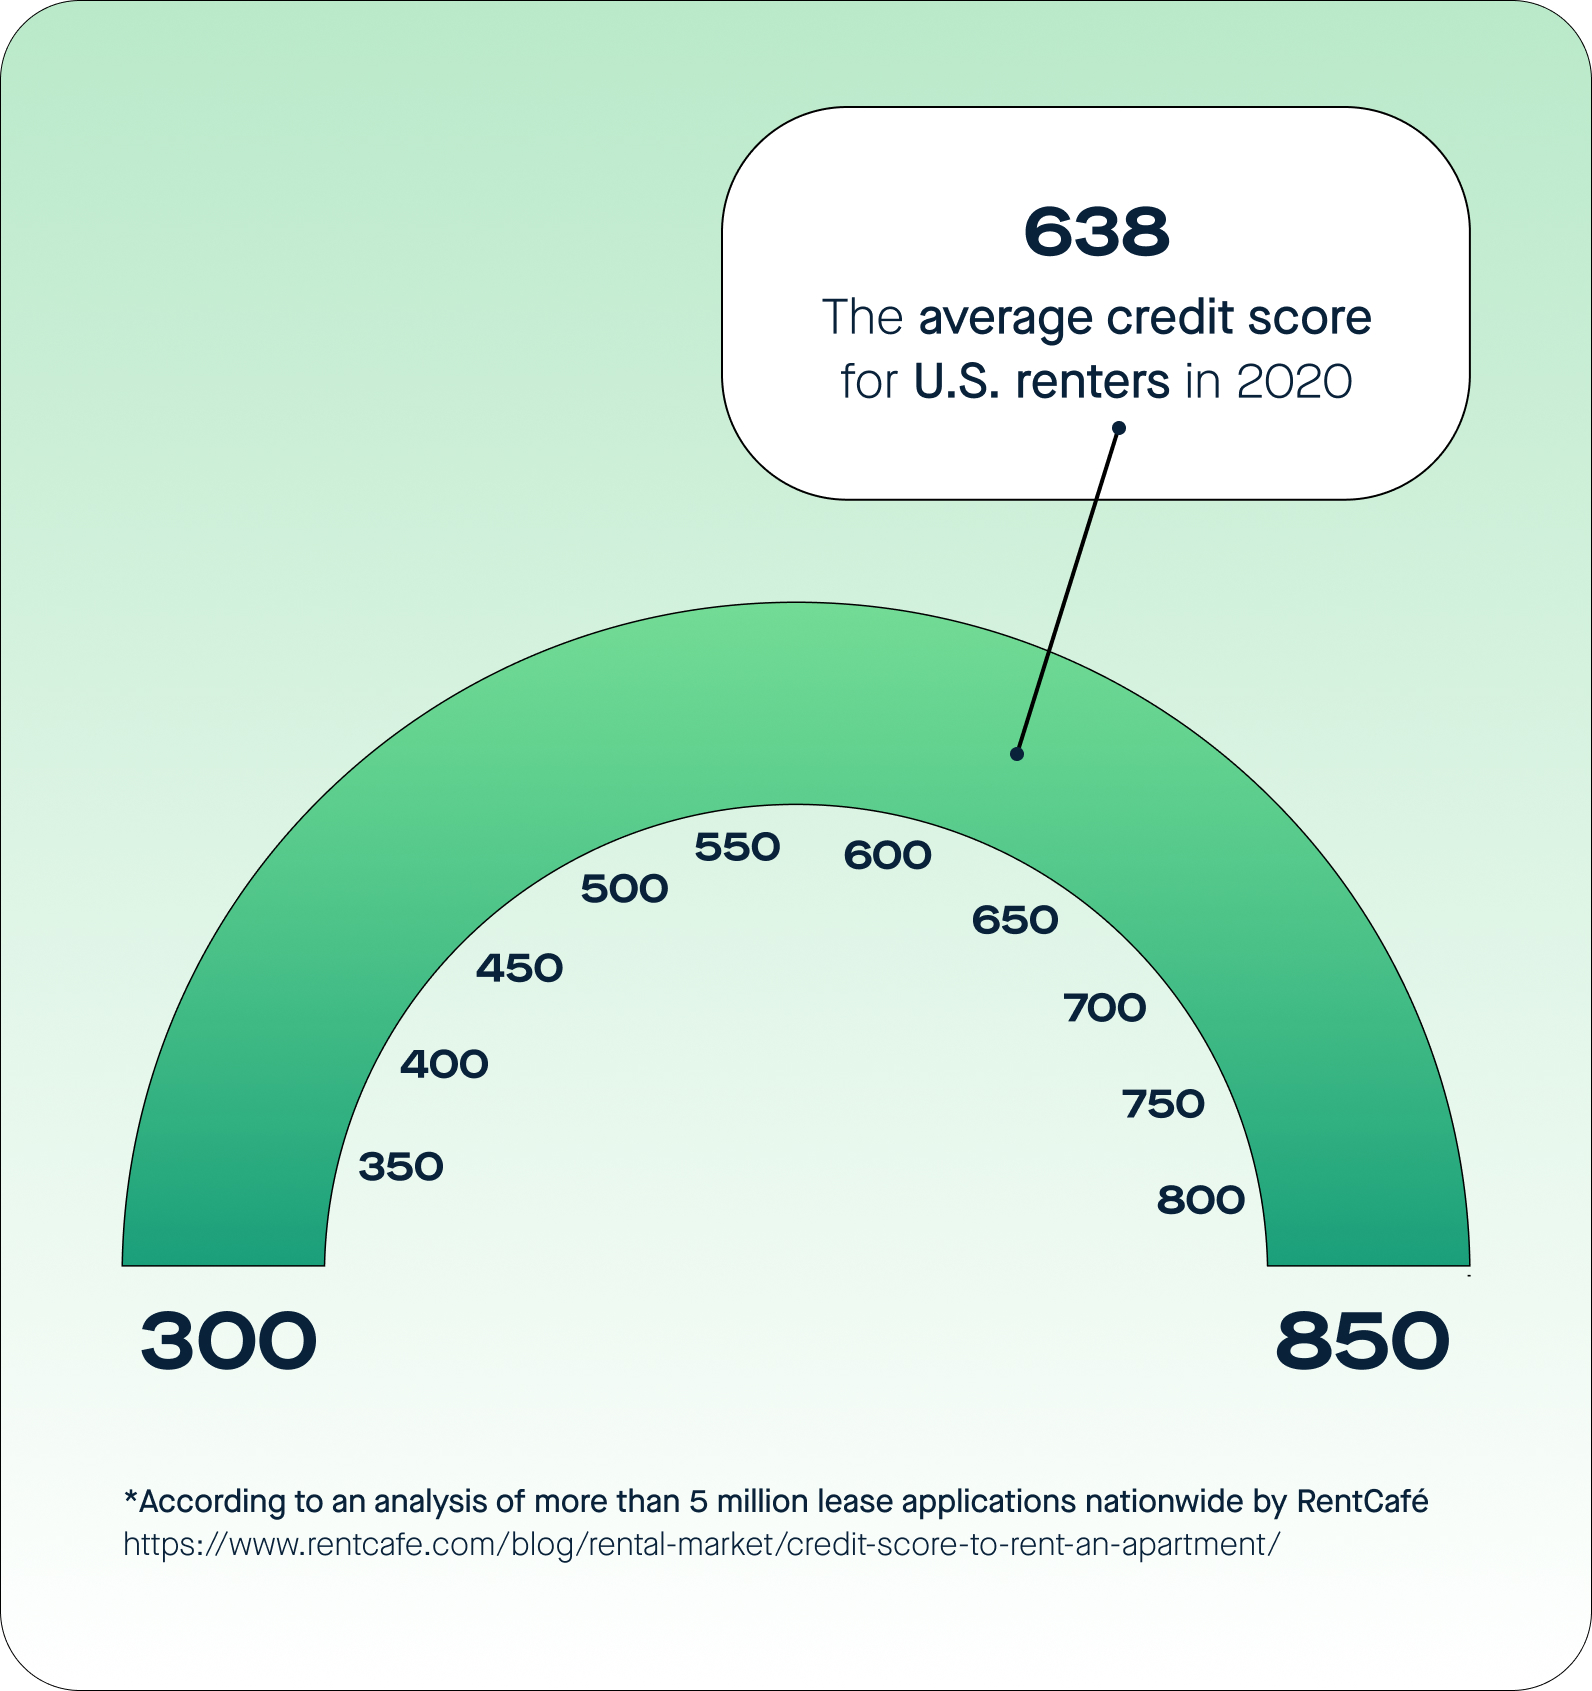 Chart of the average credit score and range. "638 - The average credit score for U.S. renters in 2020."